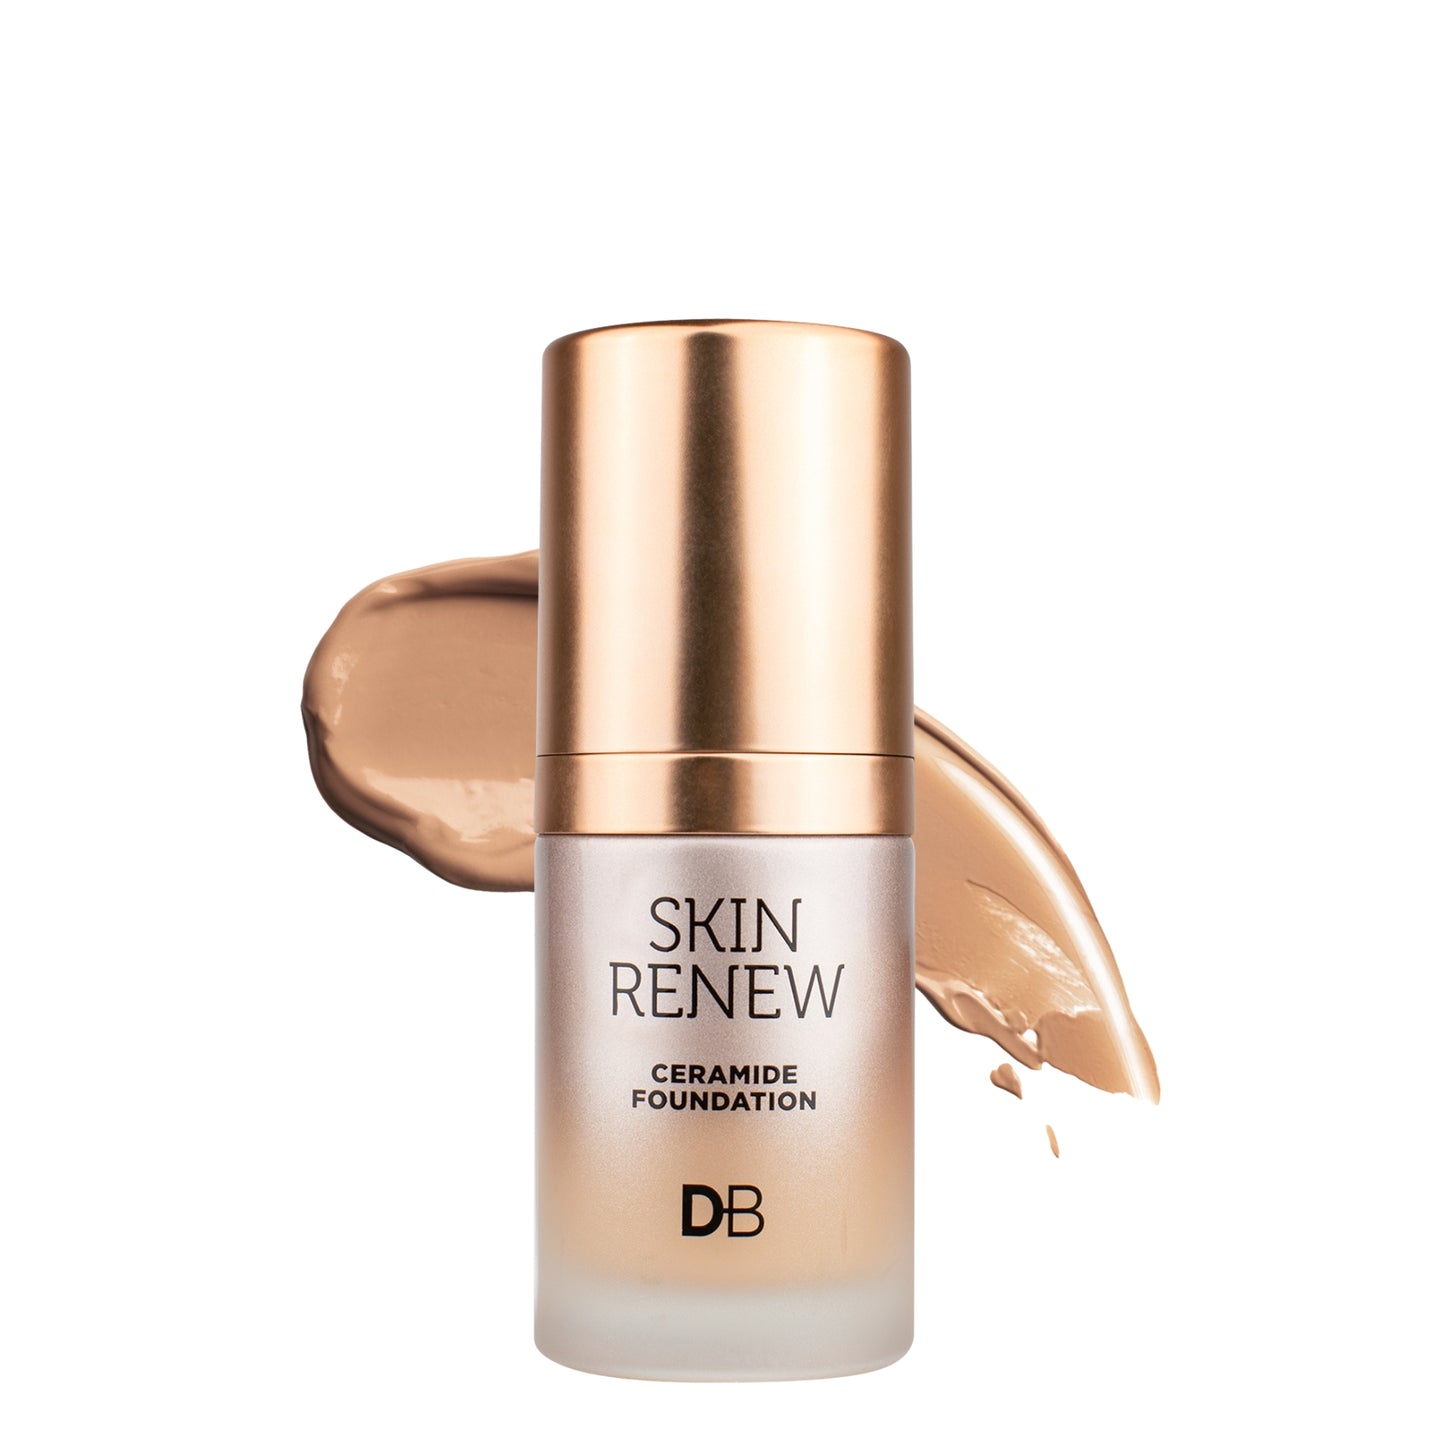 Skin Renew Ceramide Foundation (Warm Honey) | DB Cosmetics